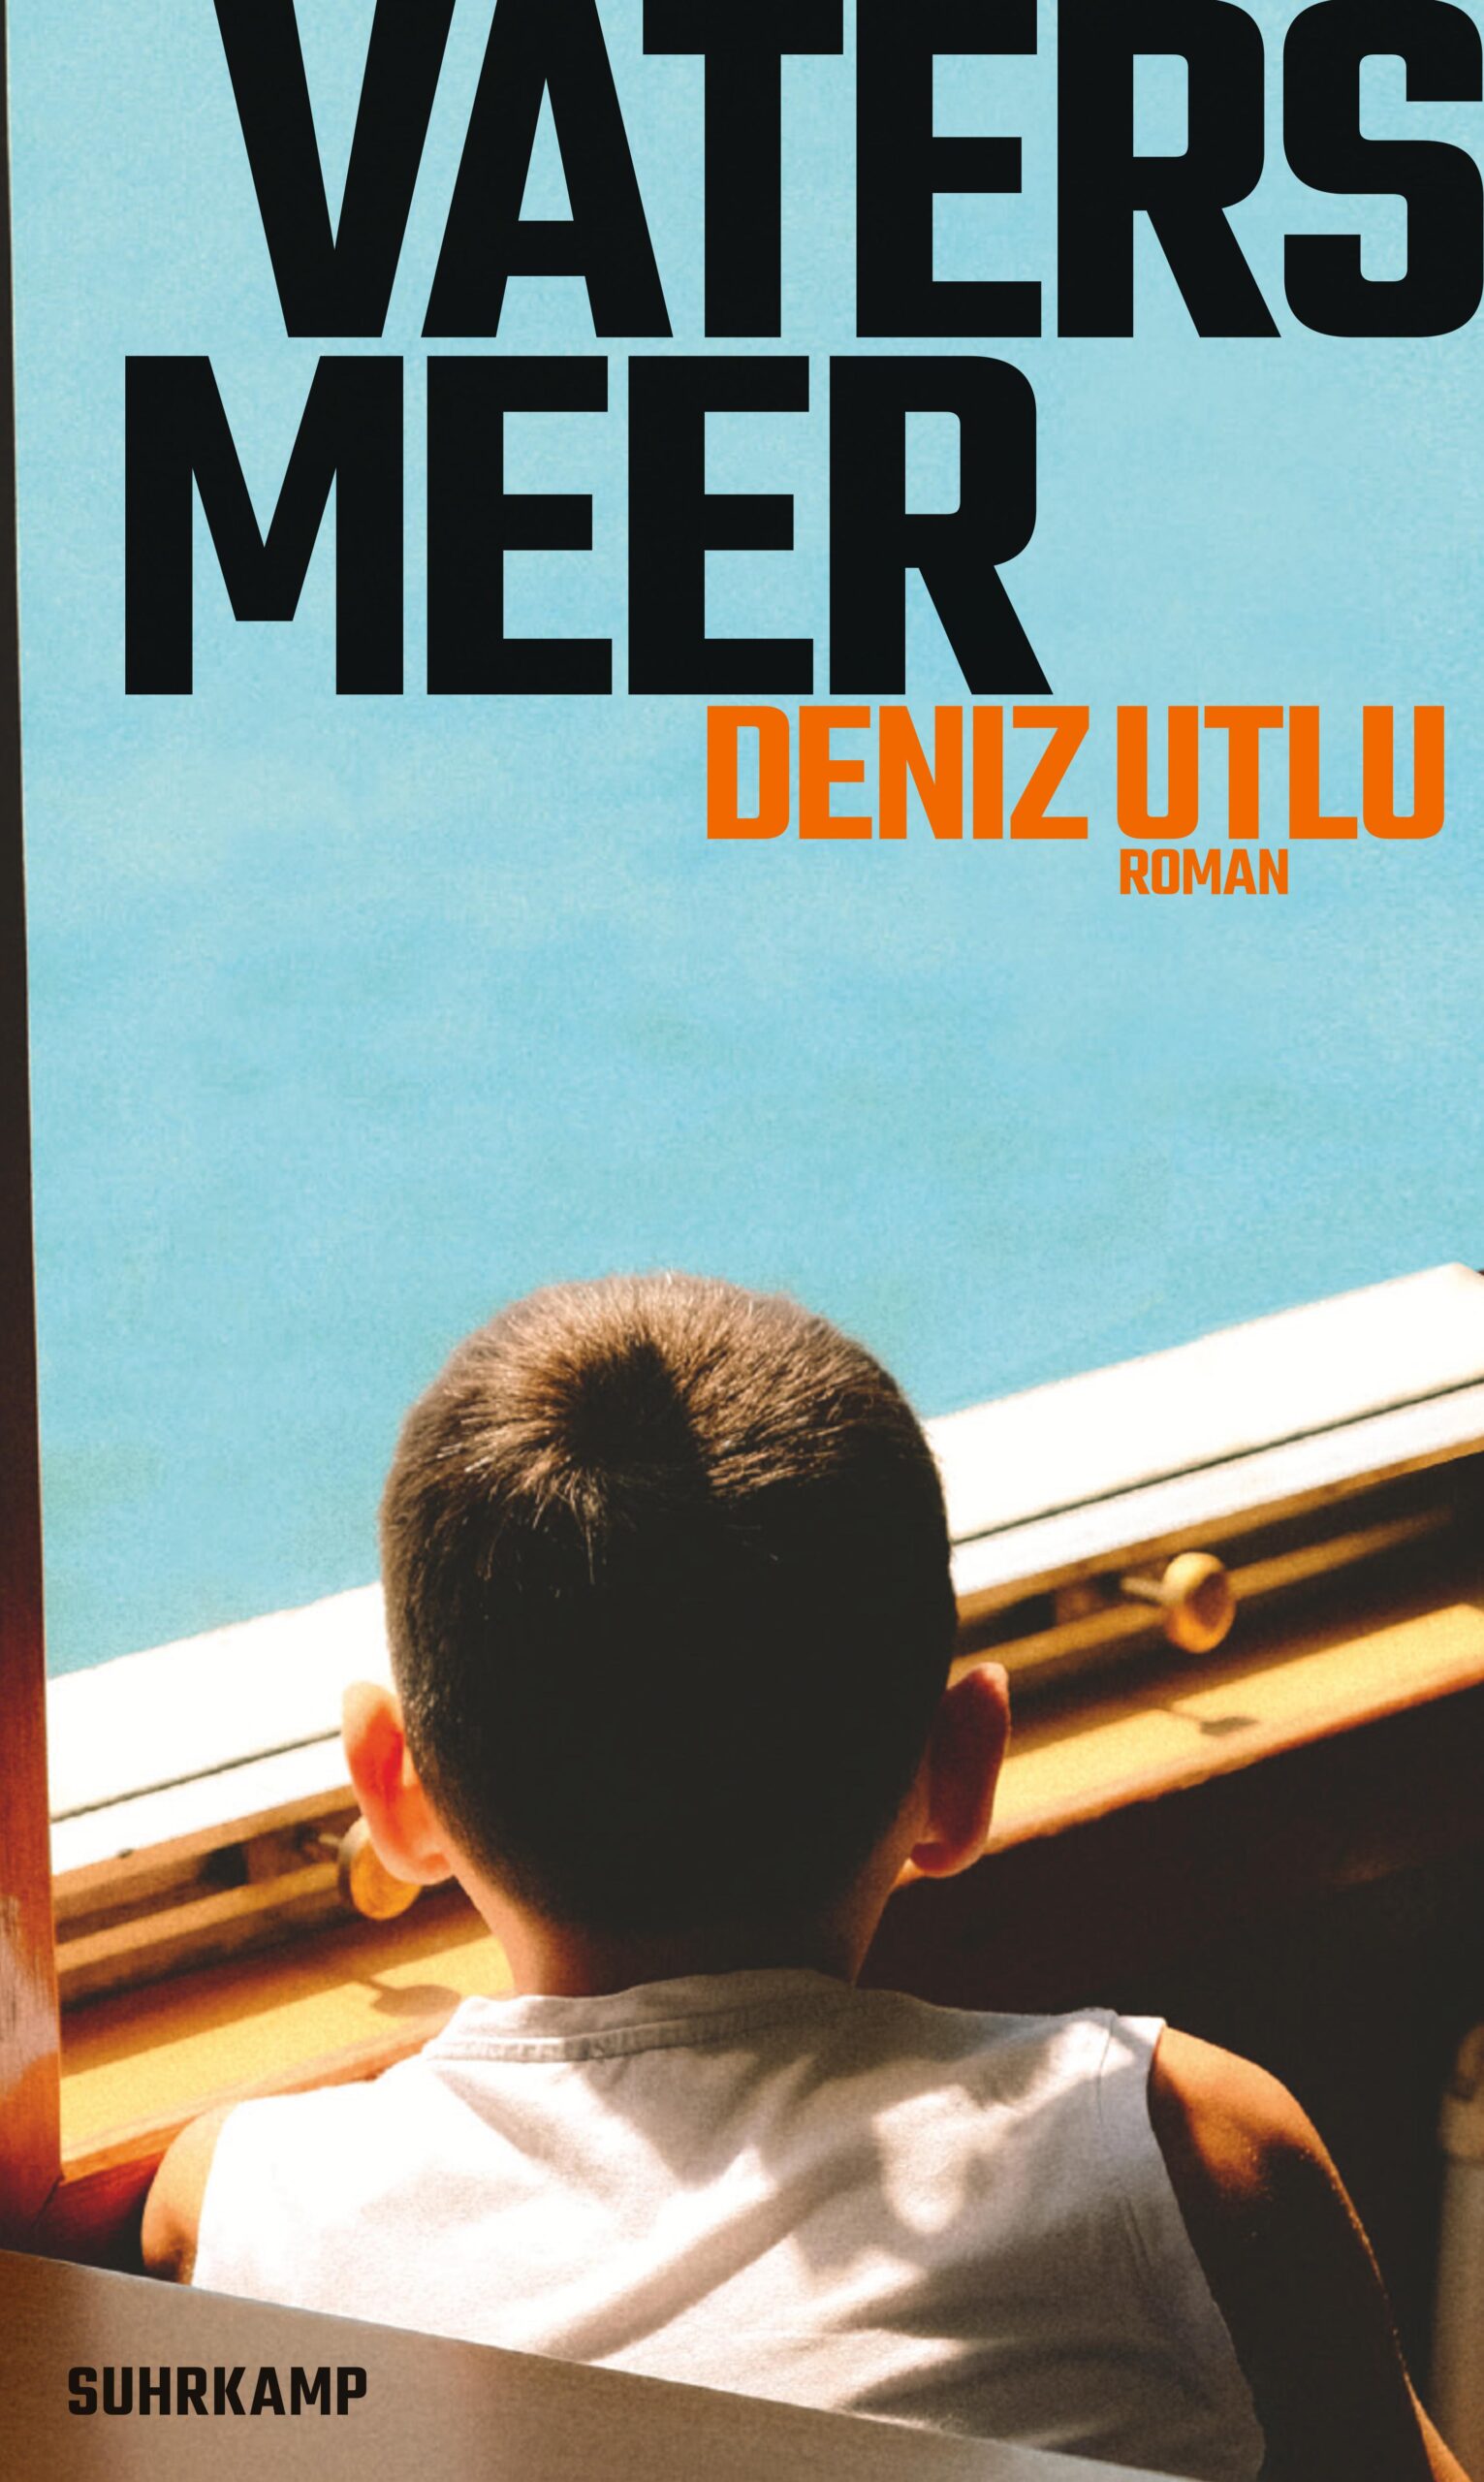 Buchcover von Deniz Utlus Vaters Meer